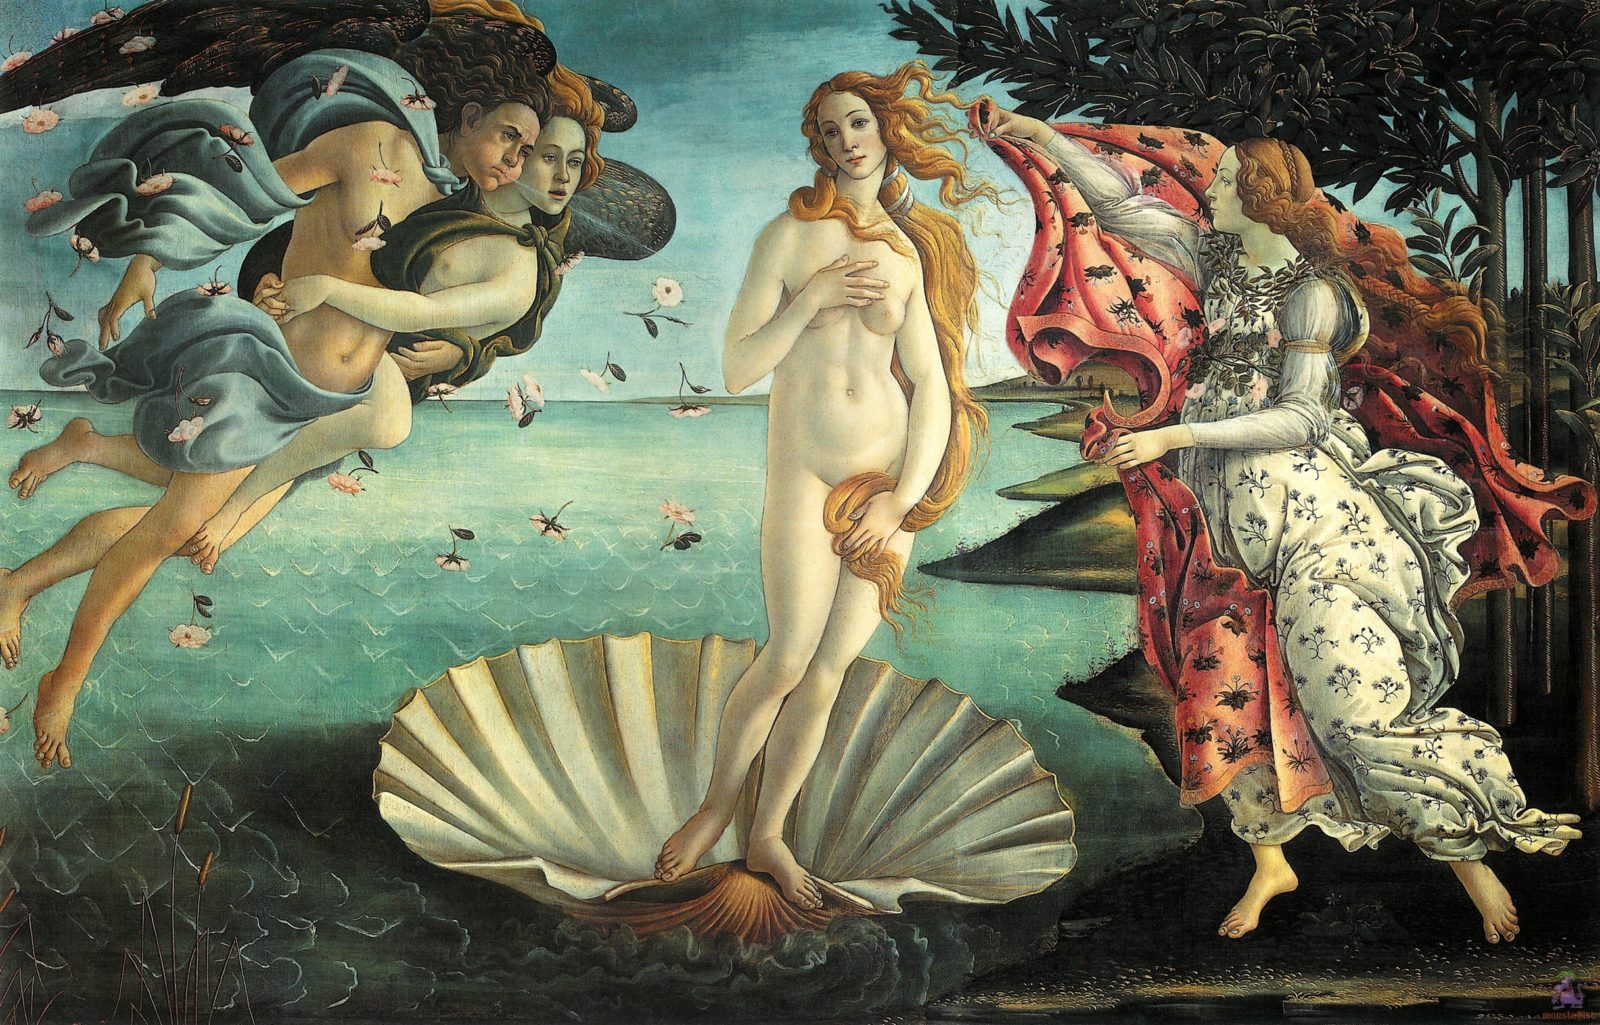 Venus: Light of Beauty and Love